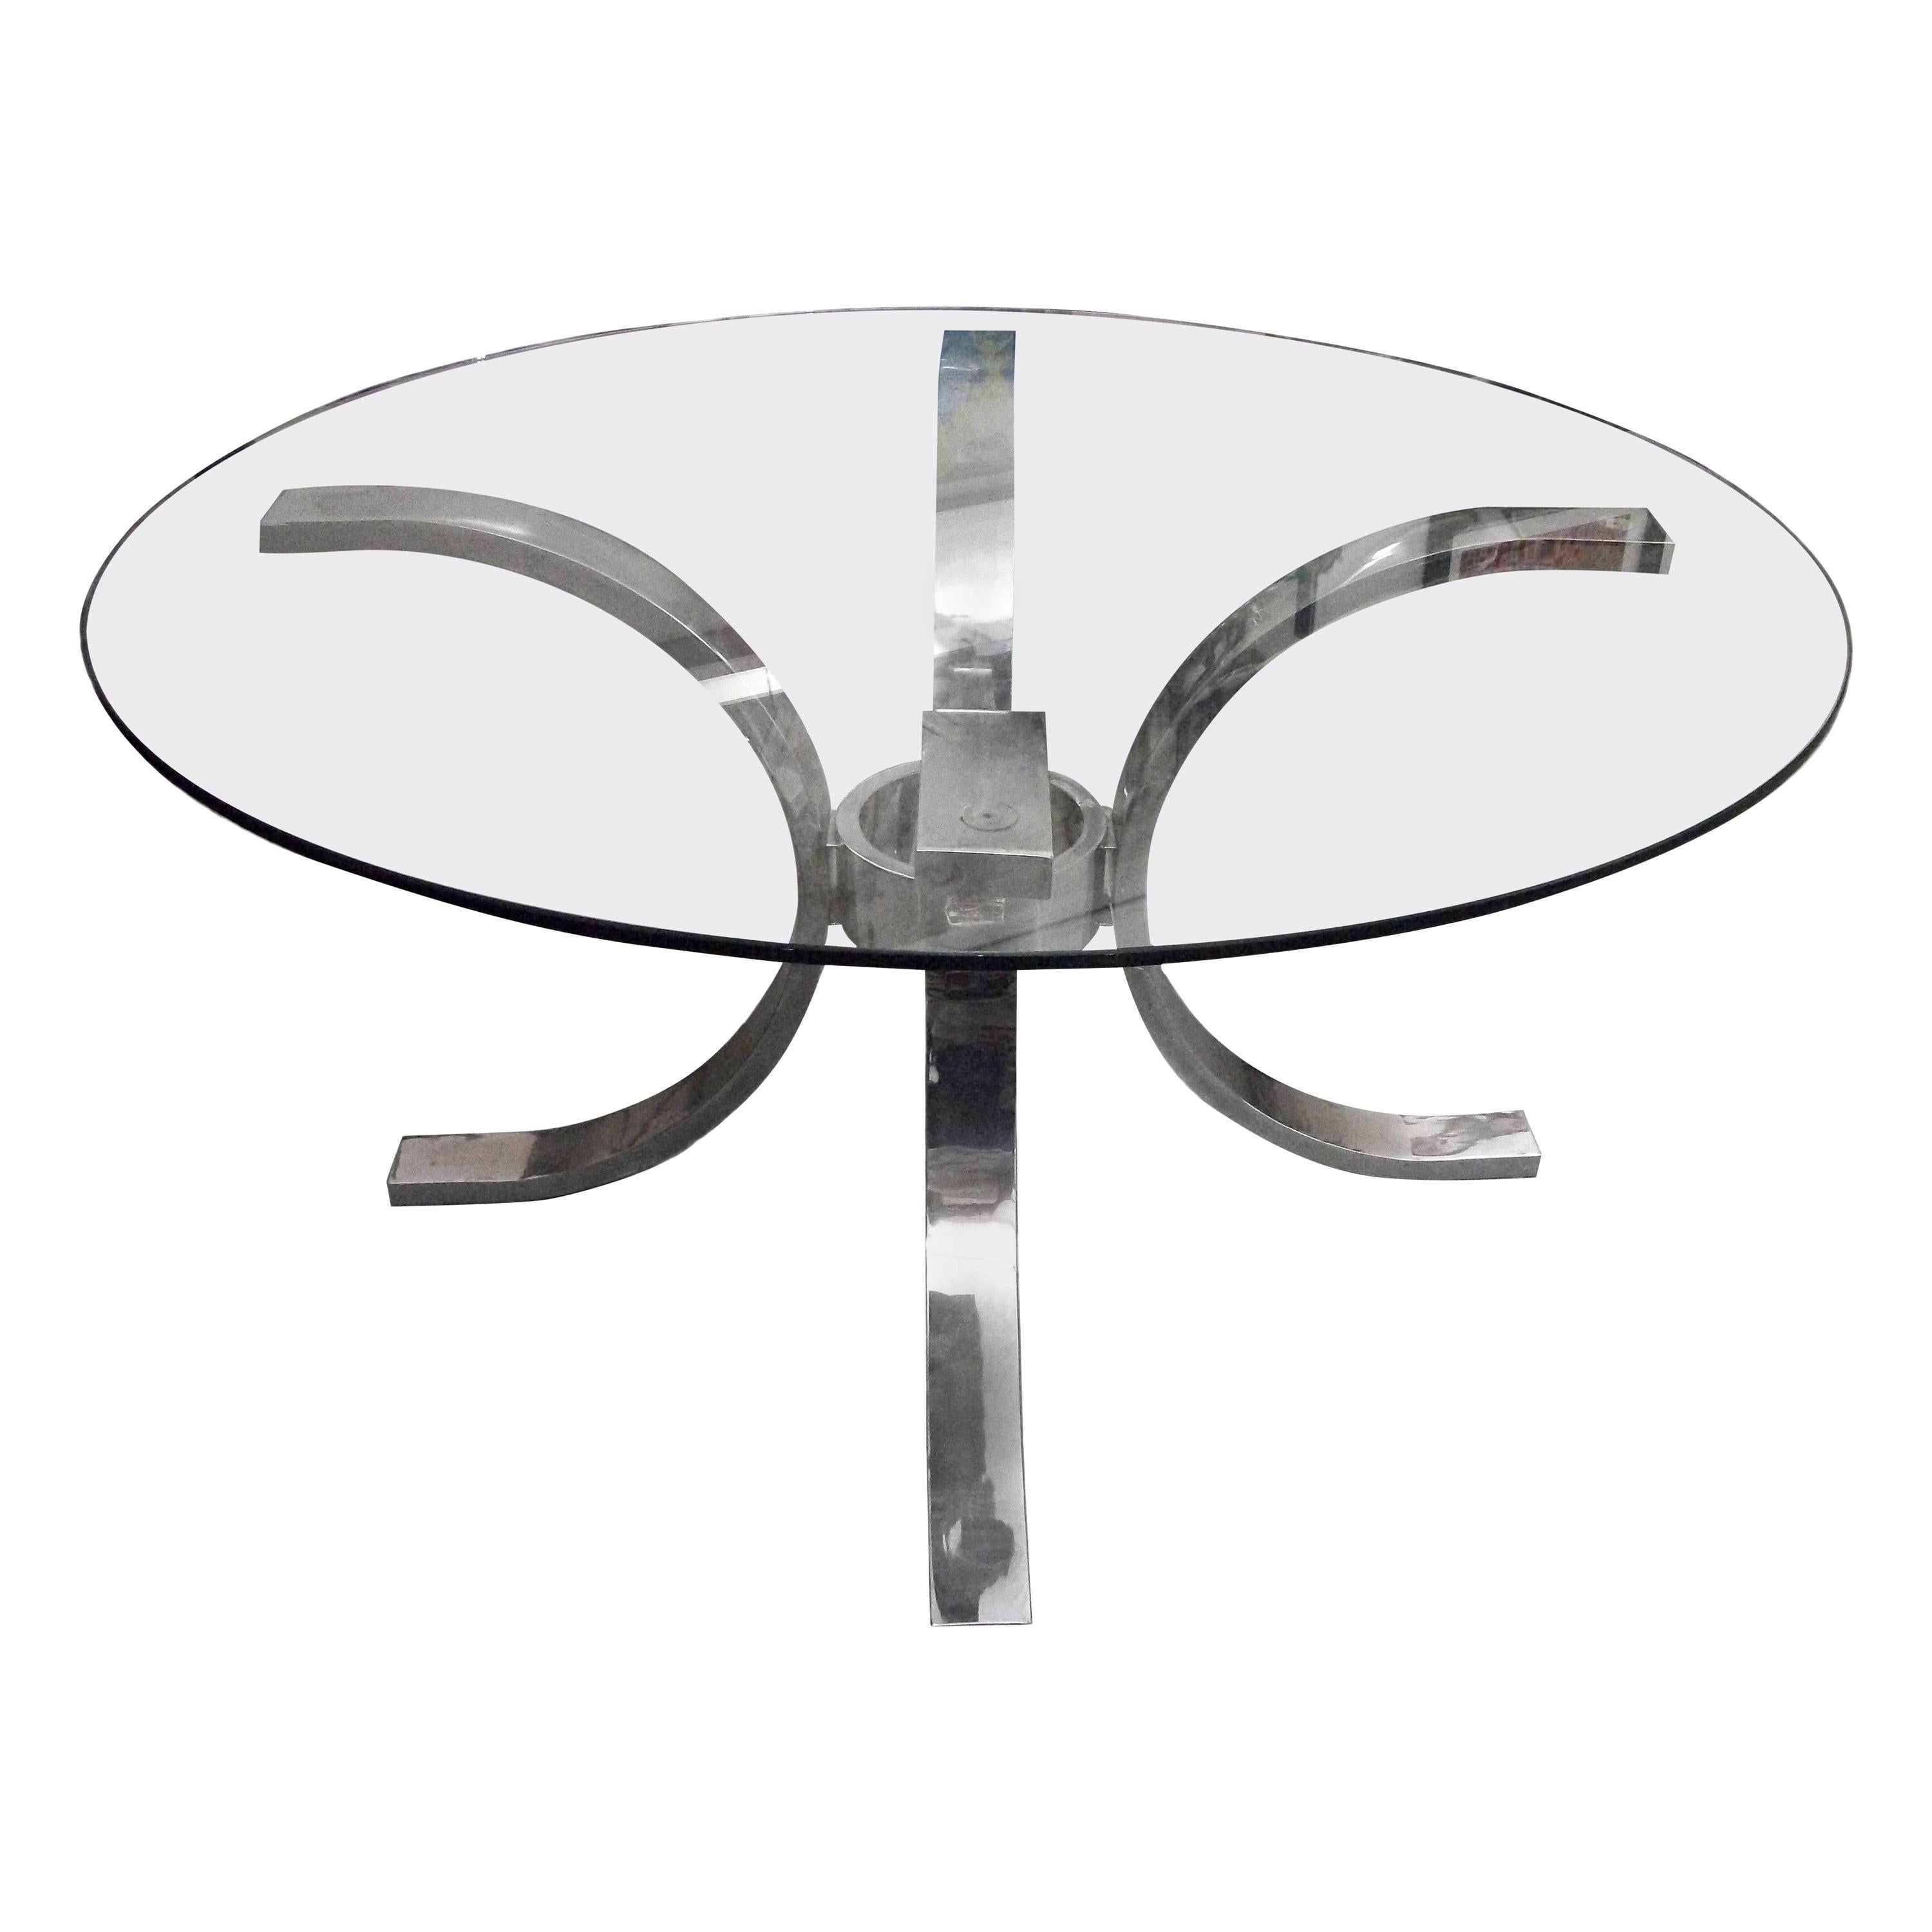 Italian Steel and Glass Round Table, 1970s, in the Manner of Osvaldo Borsani